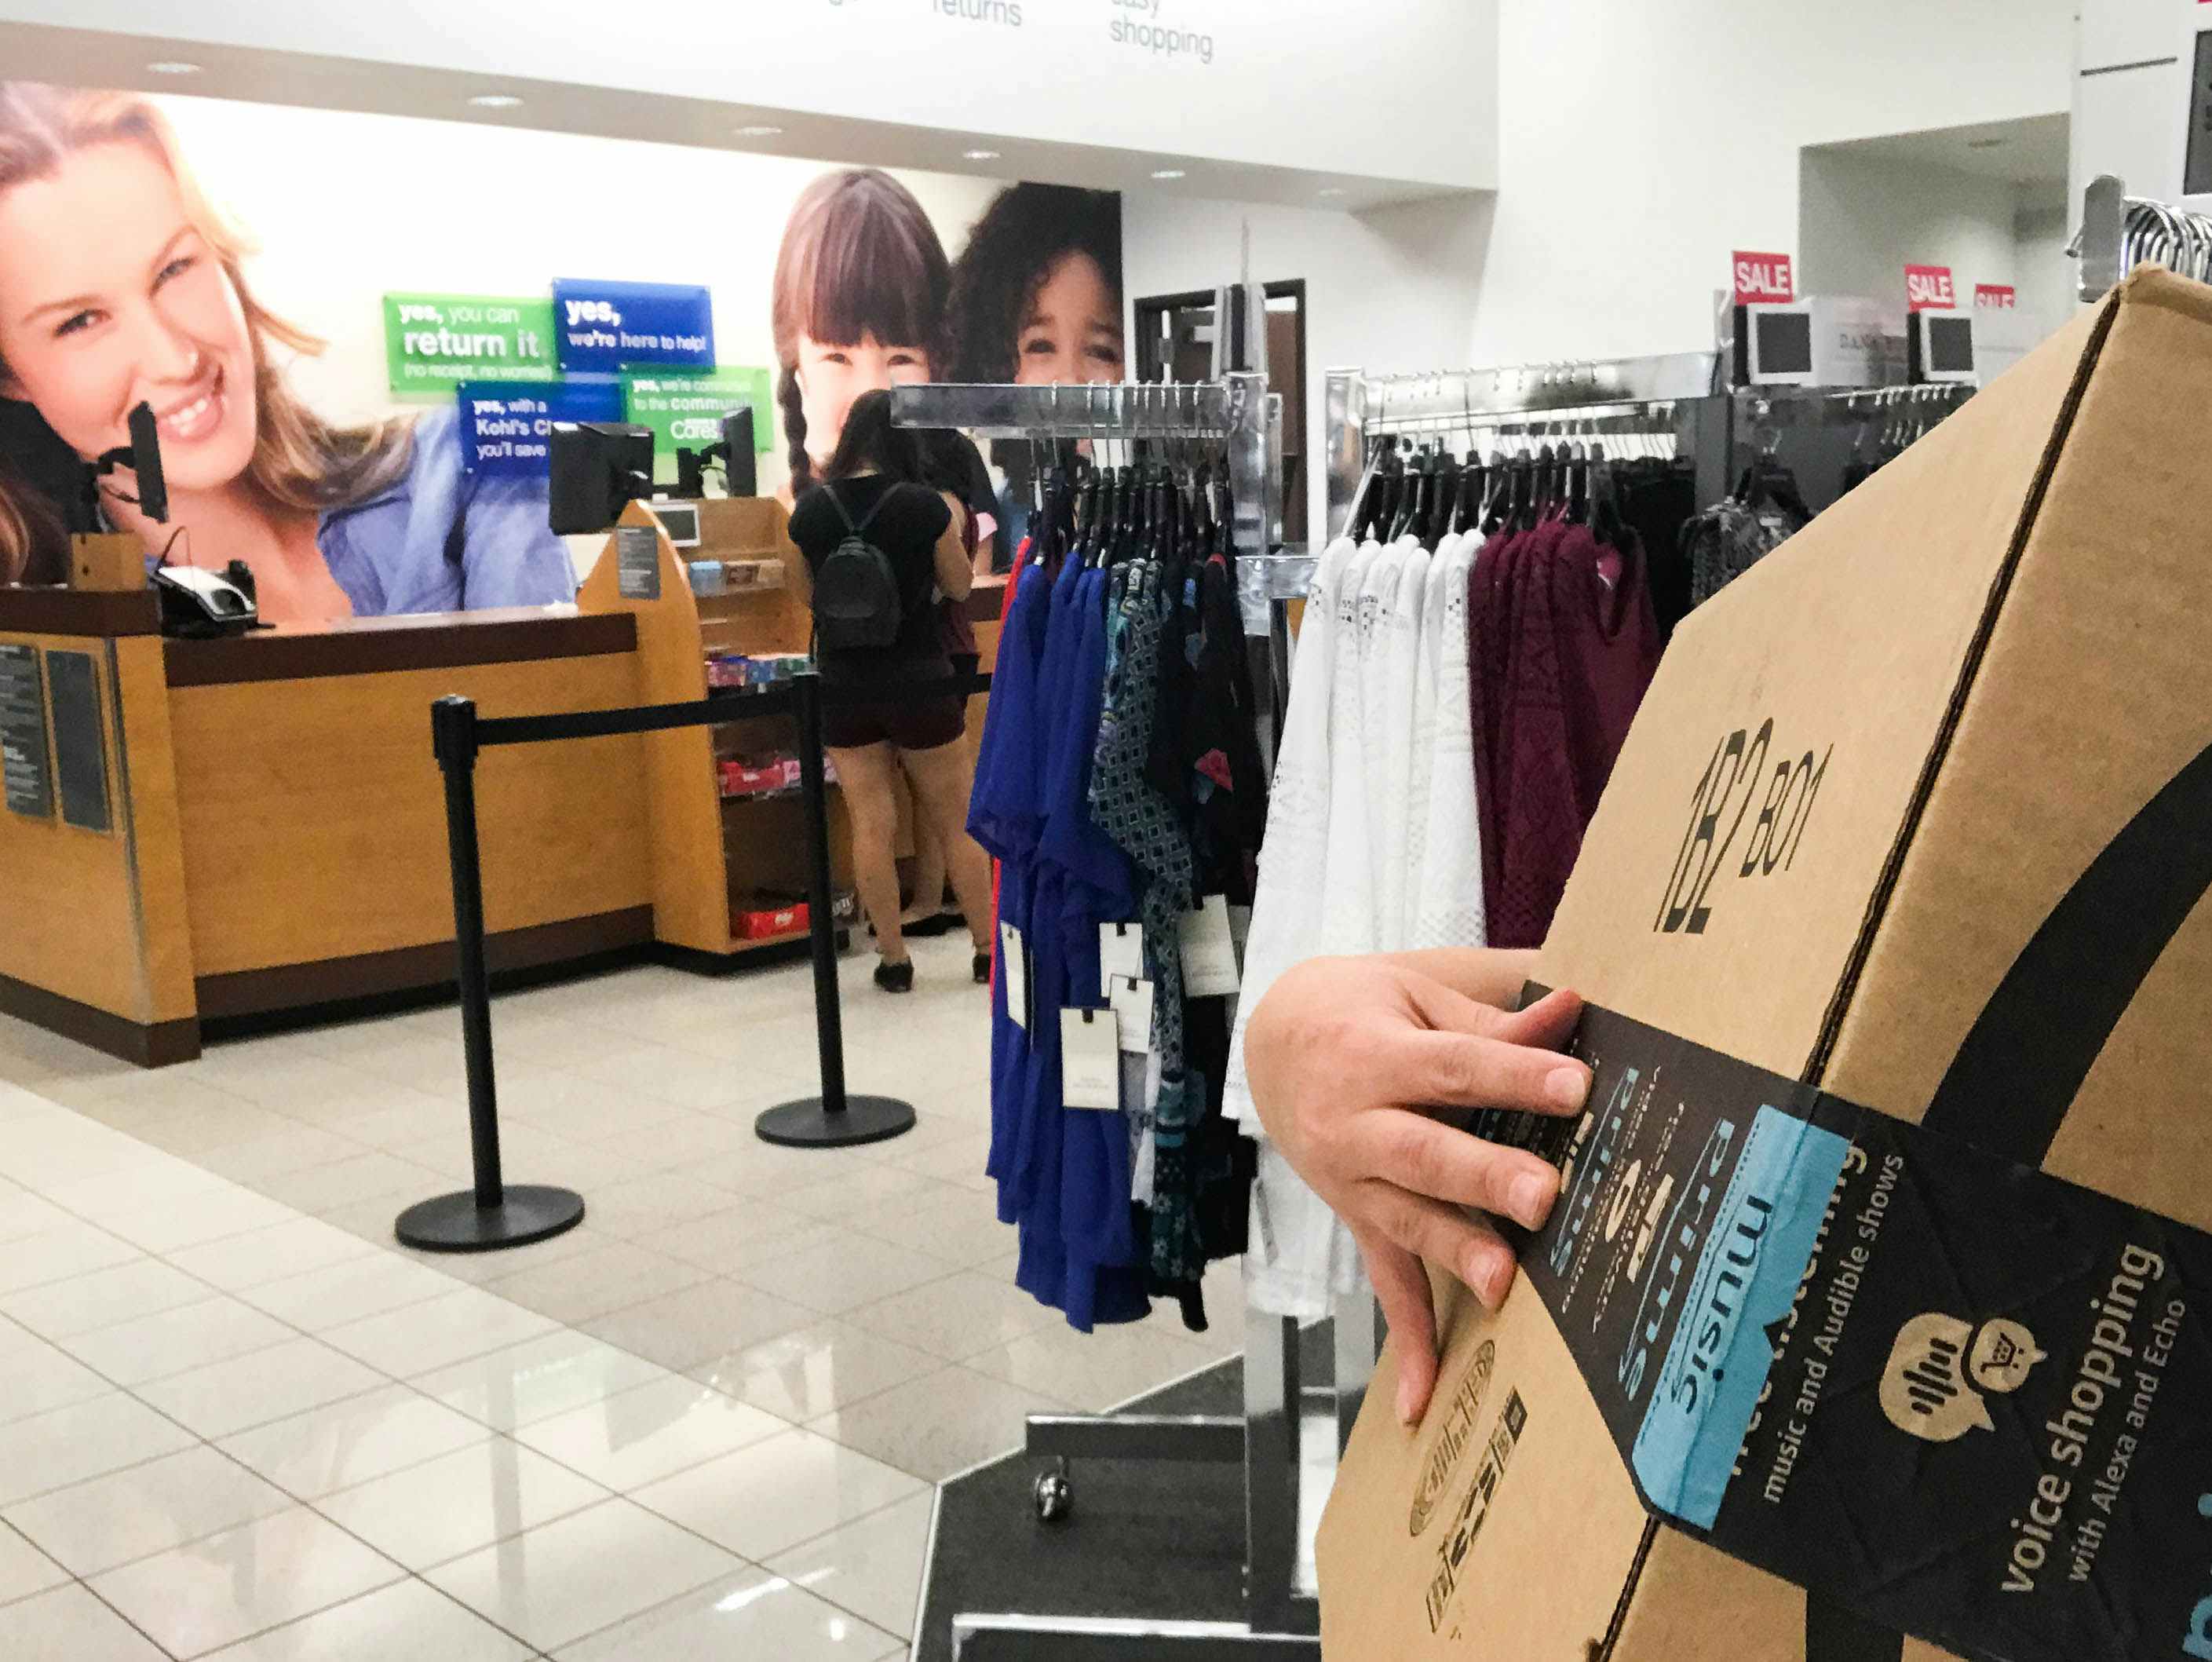 3 Retailers Telling Customers to Keep Returned Items